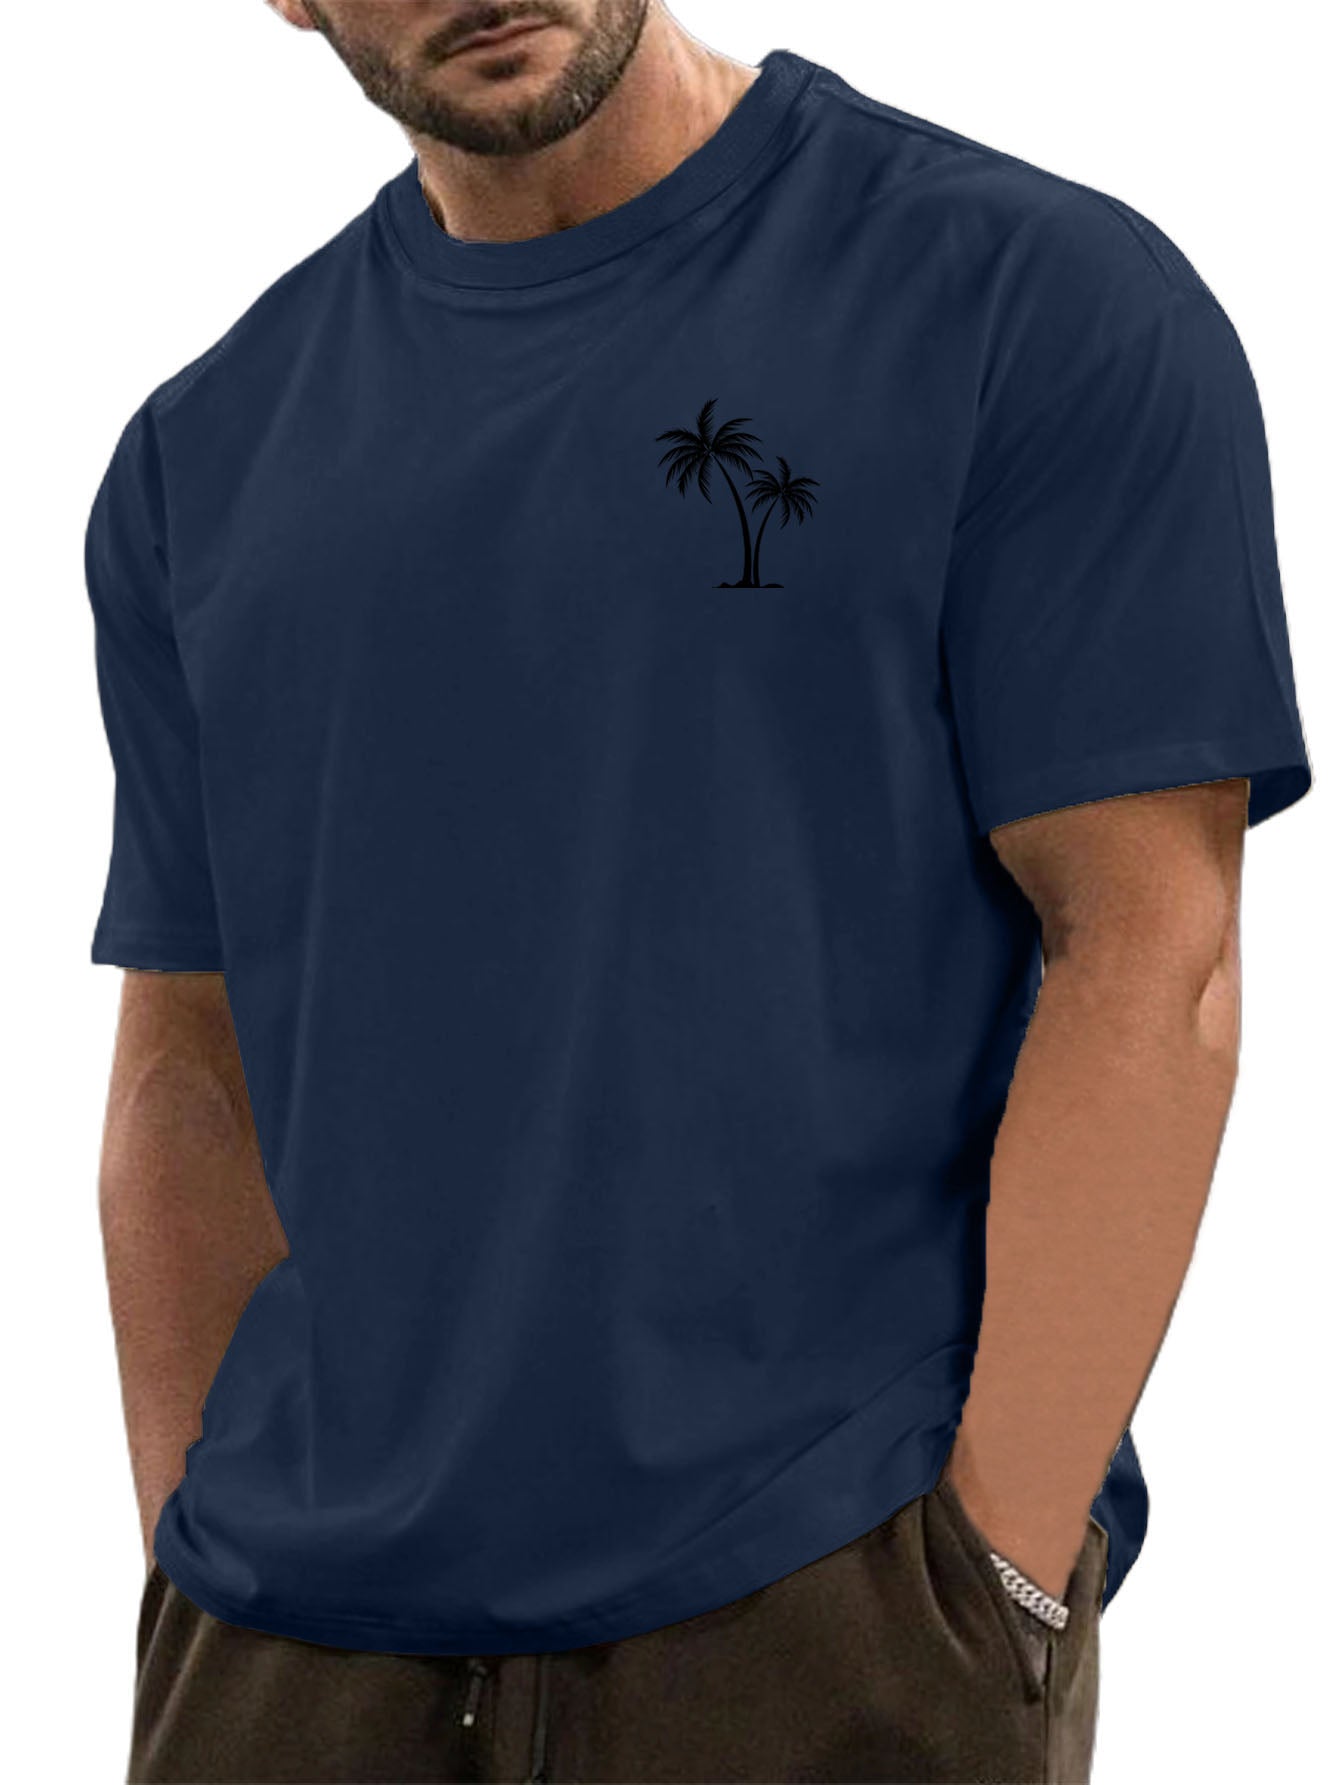 Men's Cotton Basic Hawaiian Palm Tree Print Short Sleeve T-Shirt